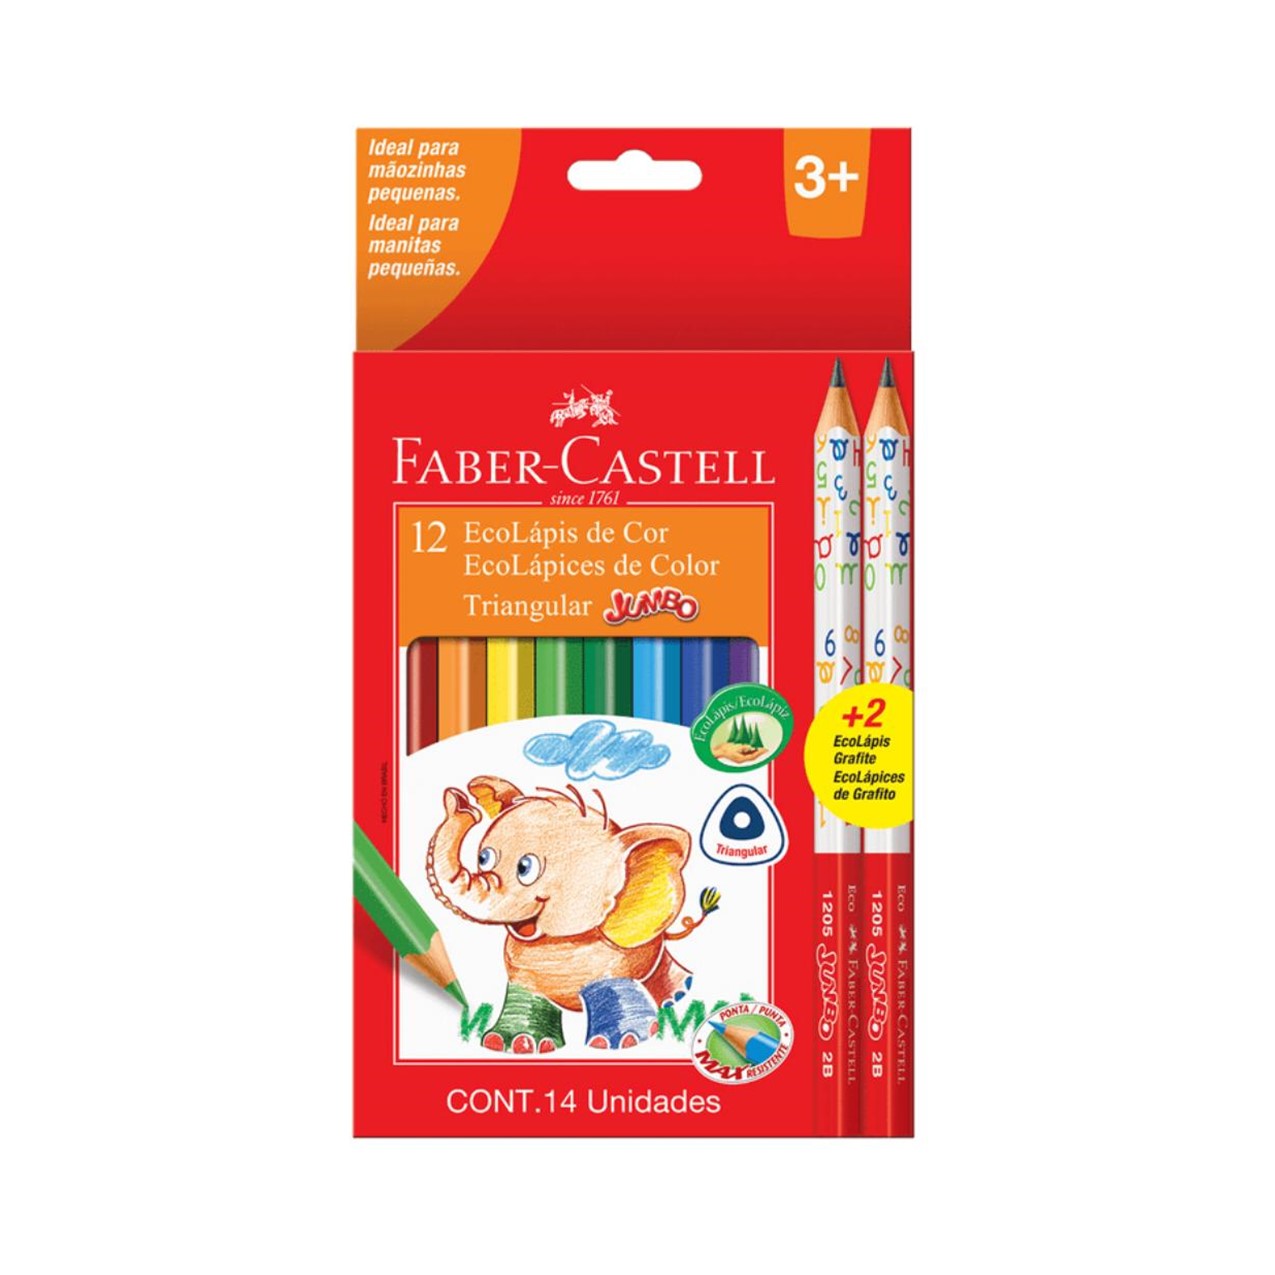 Lapices de Colores 12Col + 2 Grafitos FABER-CASTELL